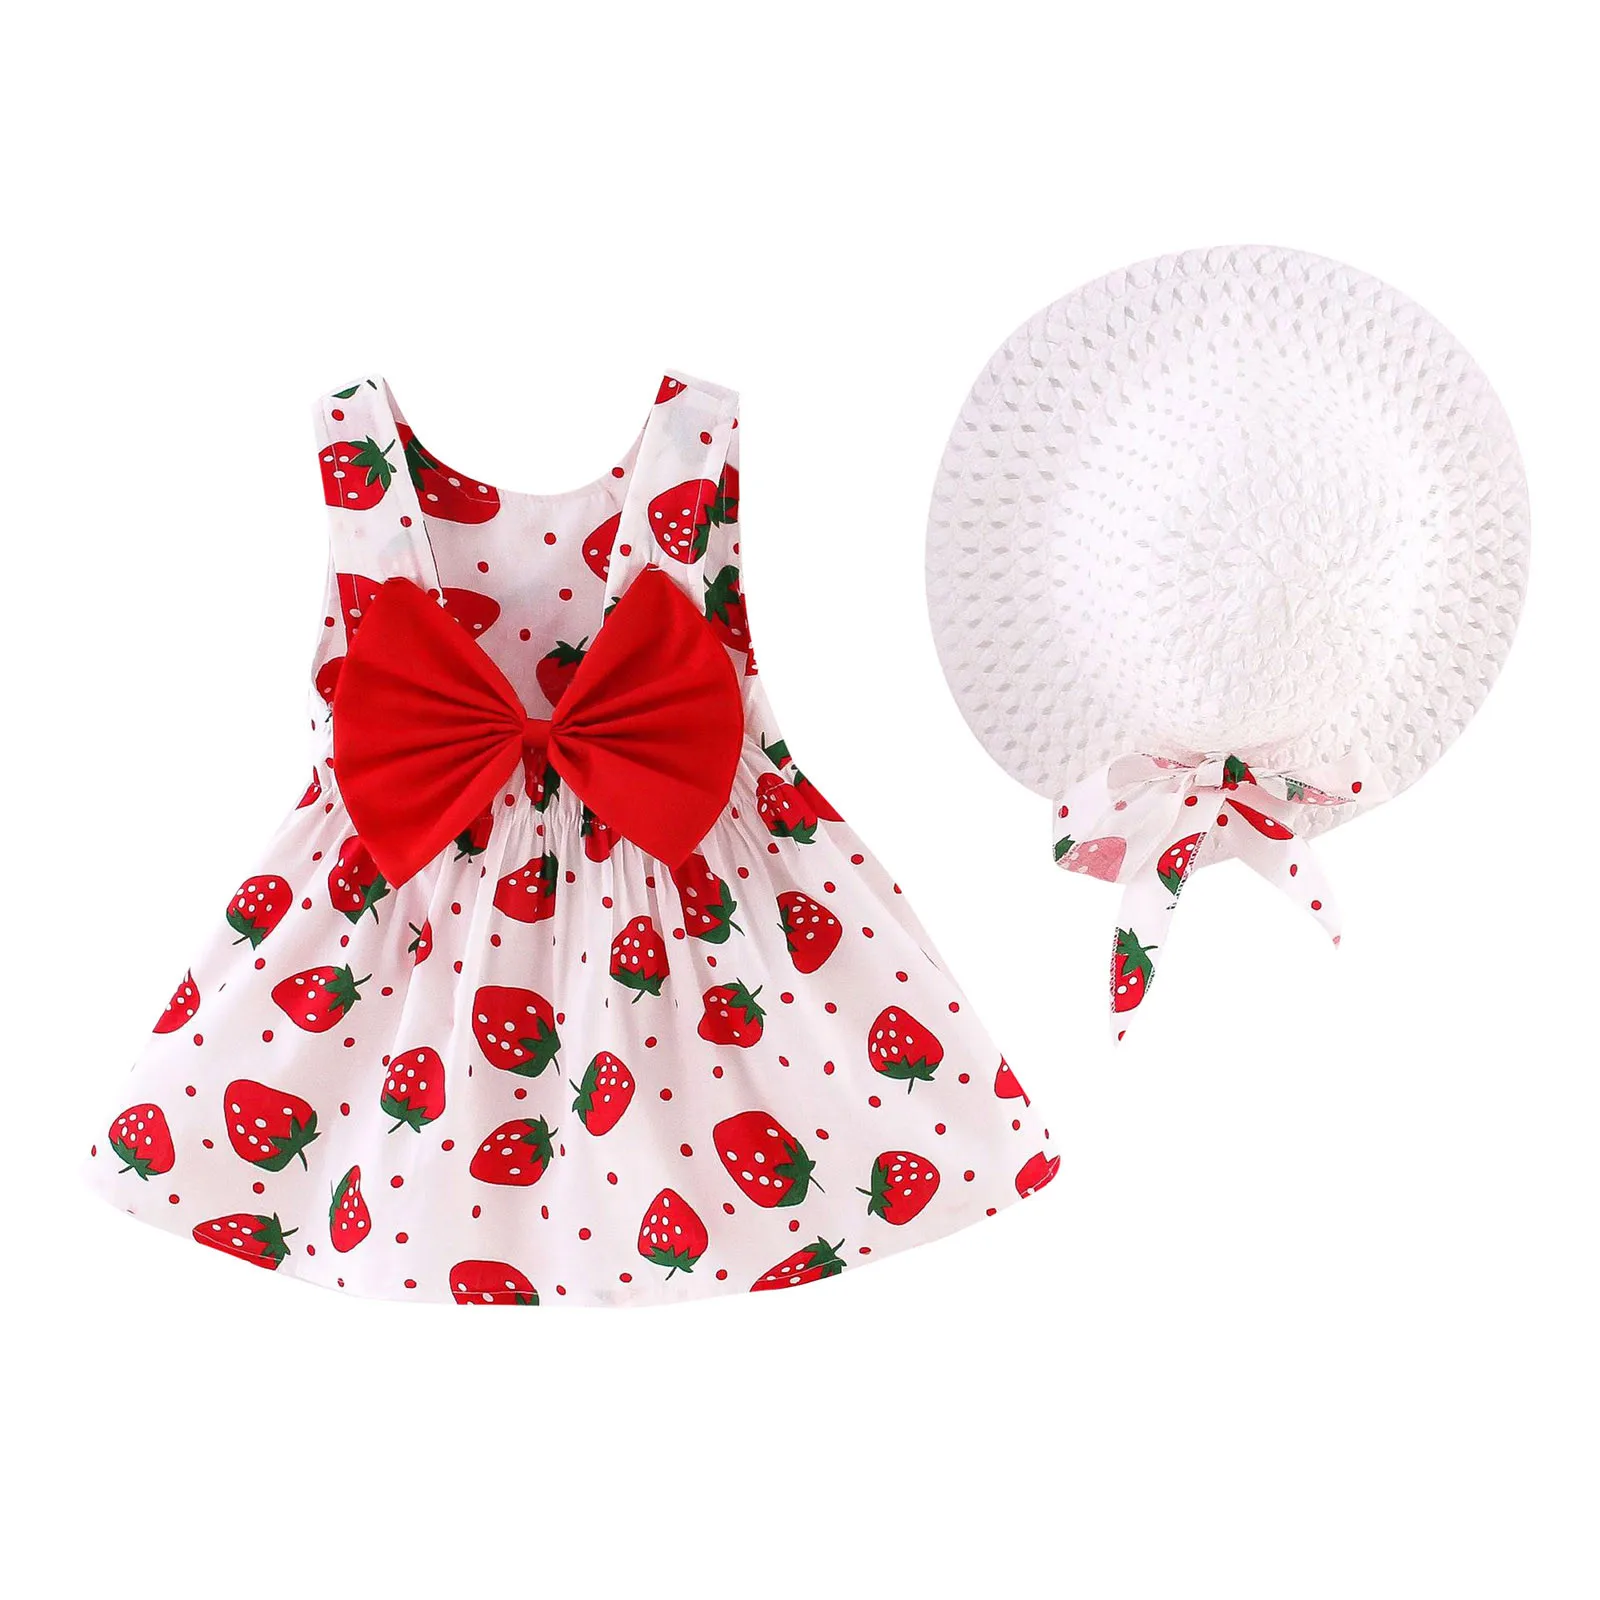 Toddler Baby Kids Girls Sleeveless Polka Dot Print Princess Dress Hat Outfits 